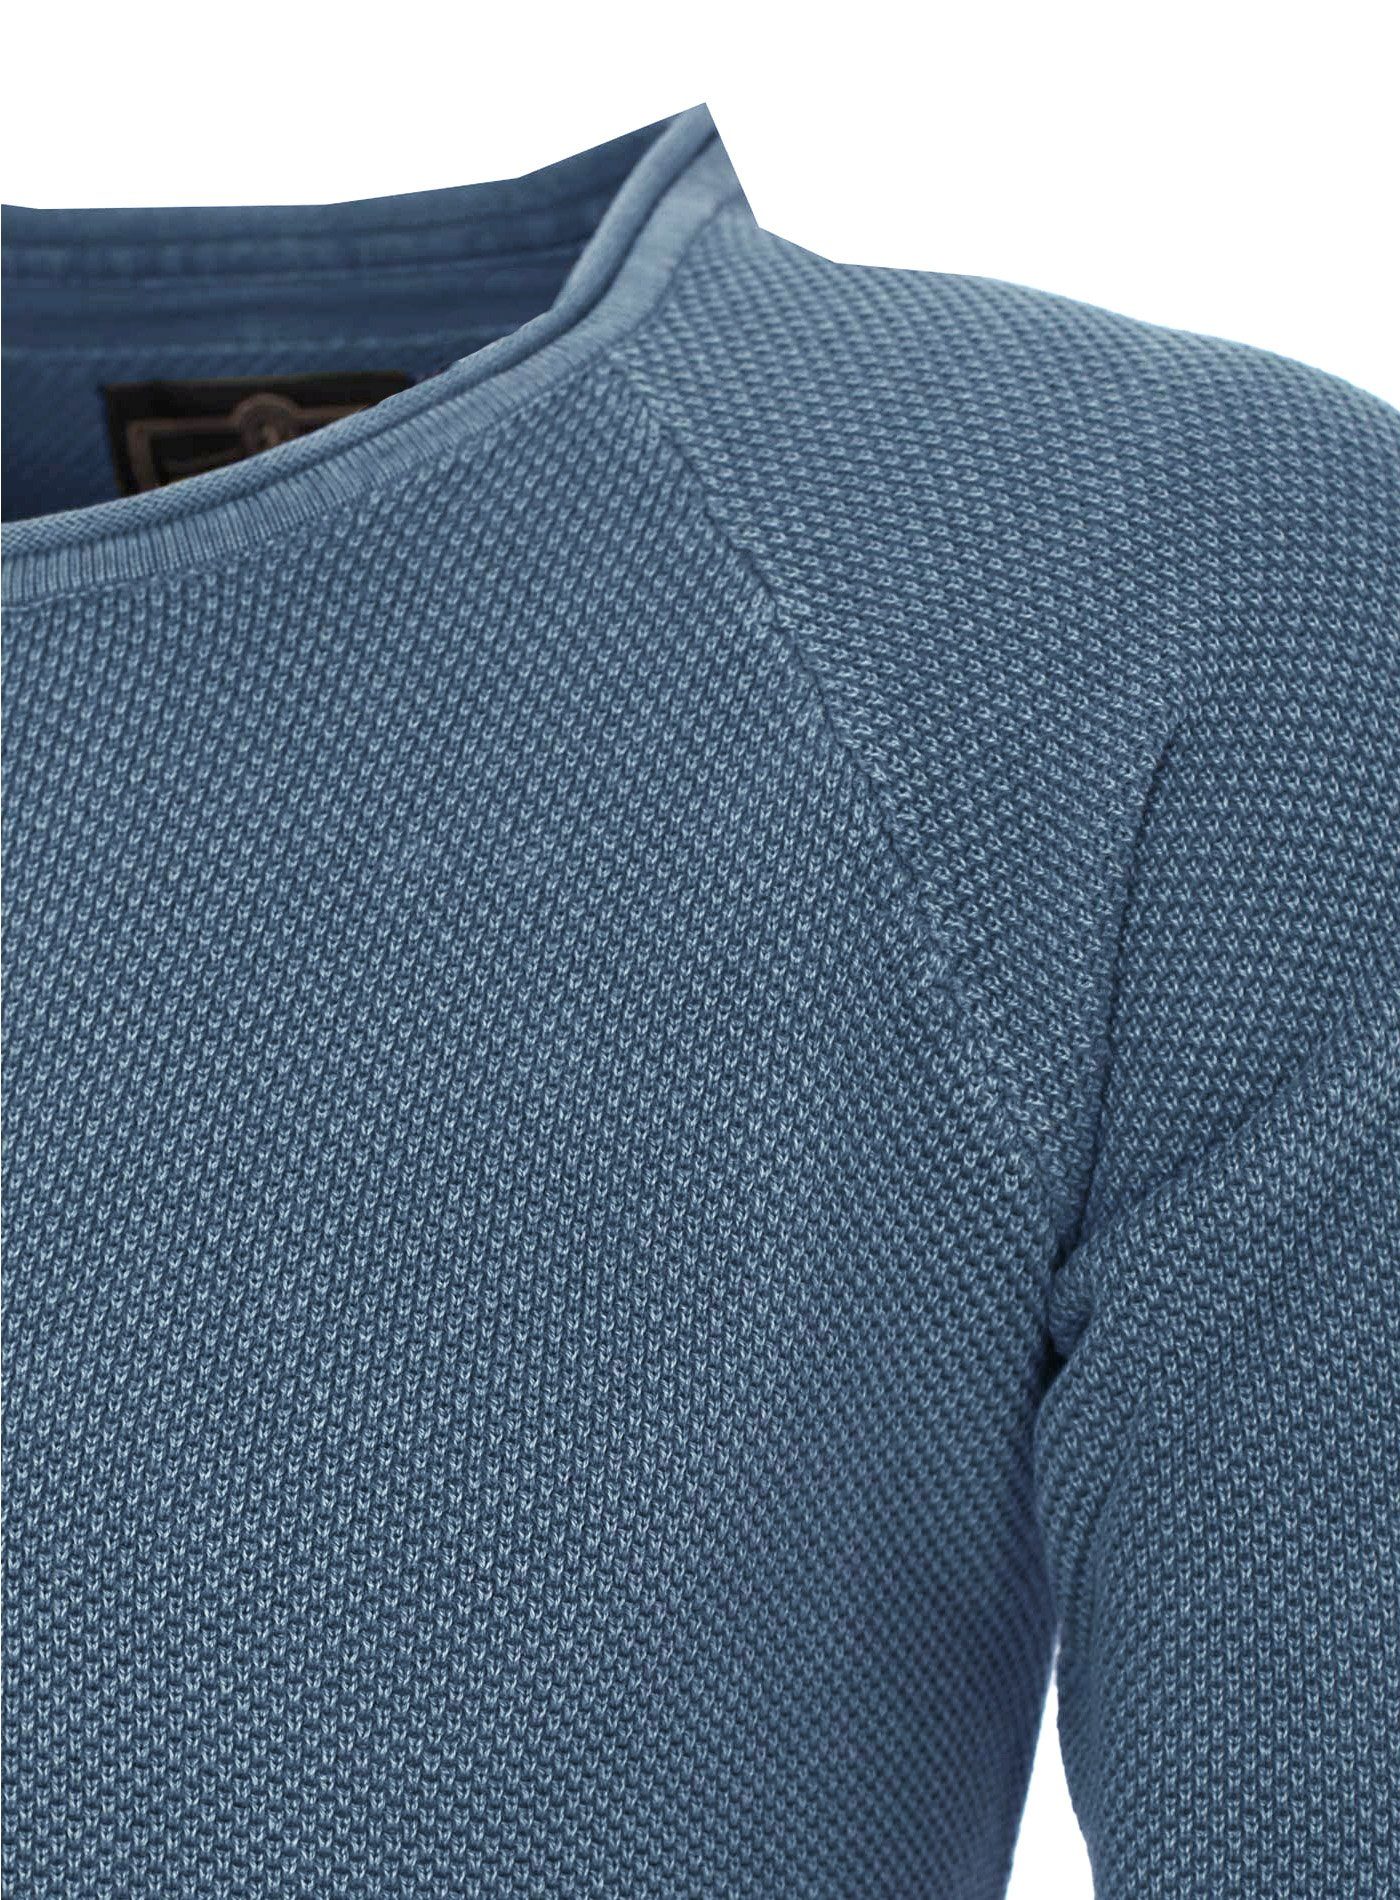 Key Largo Langarmshirt mit dezenter Musterung blau